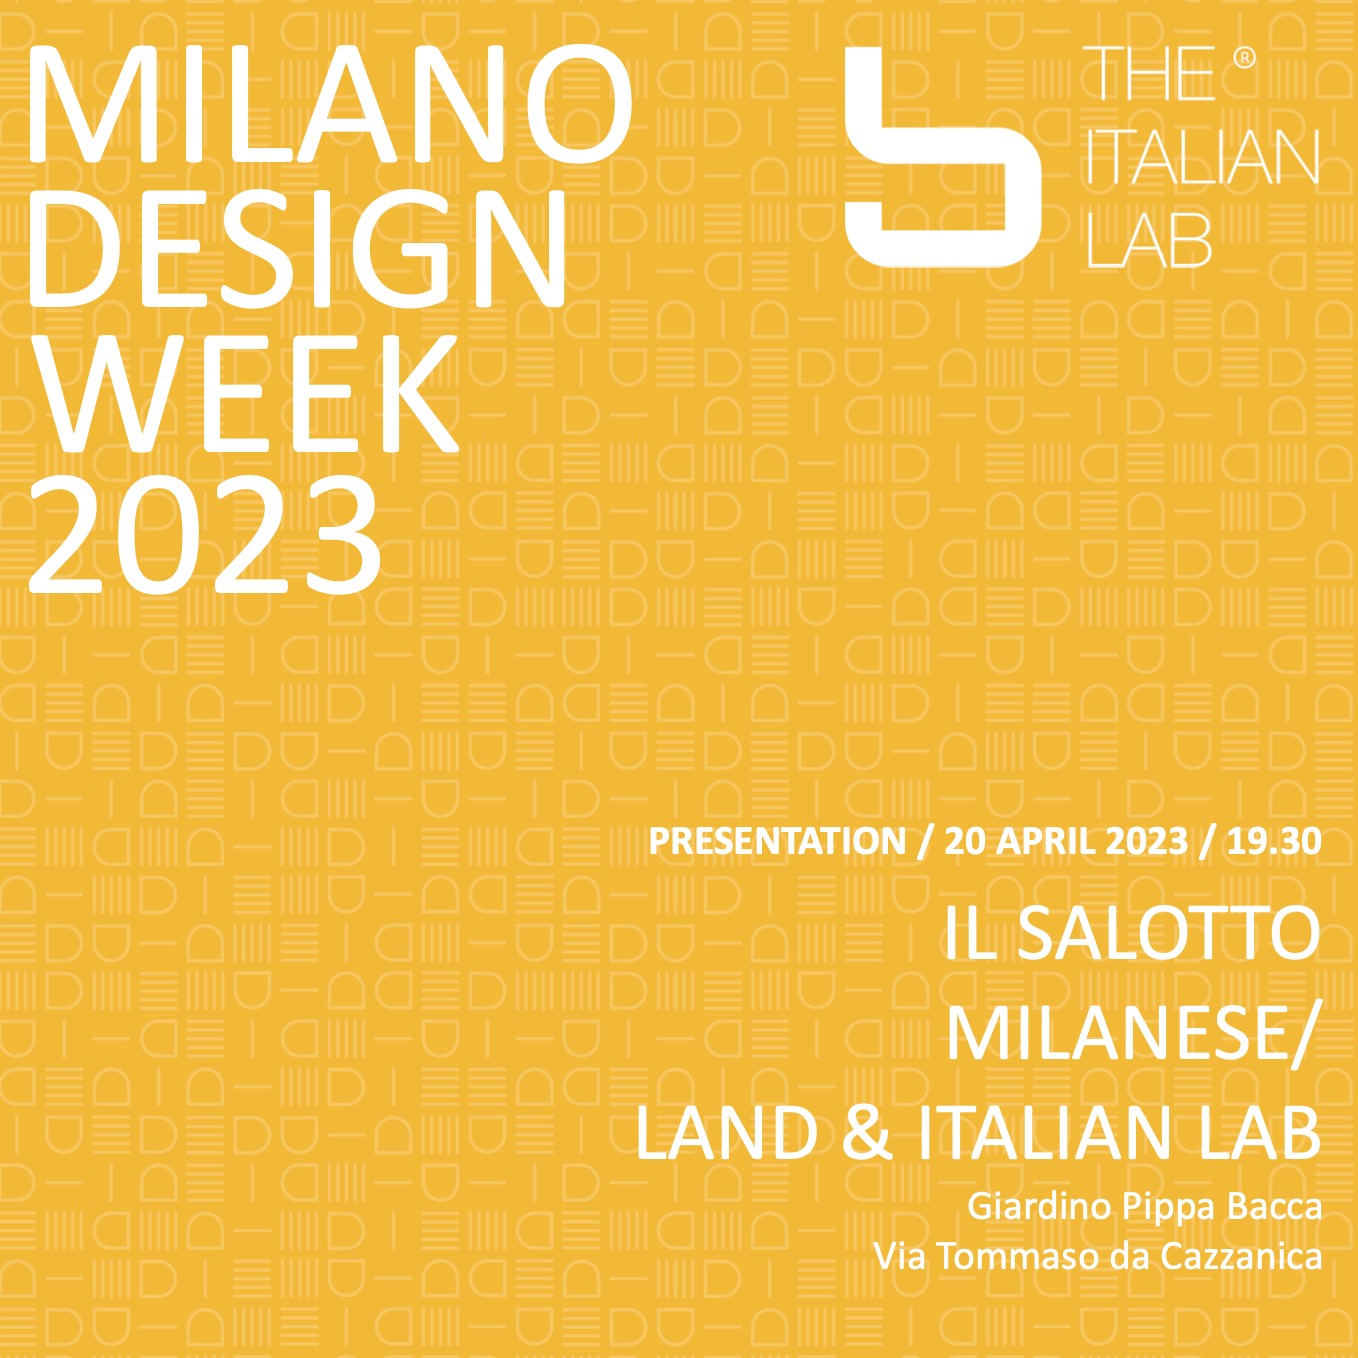 MILANO DESIGN WEEK 2023 - The Italian Lab